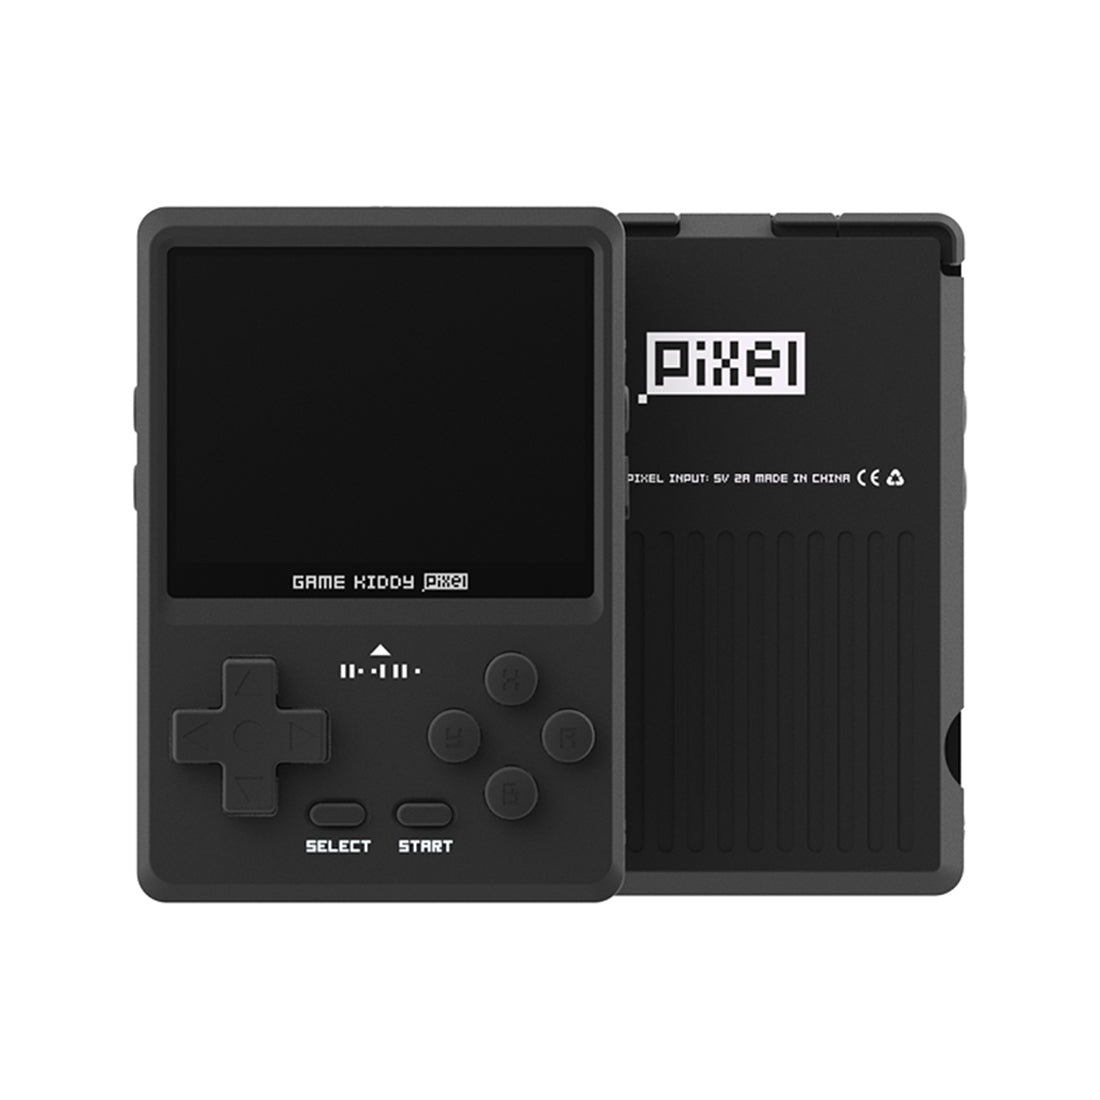 gkd-pixel-metal-retro-game-console-black (1).jpg__PID:4b1cbc11-d54c-4da1-aa94-82d06b97e018